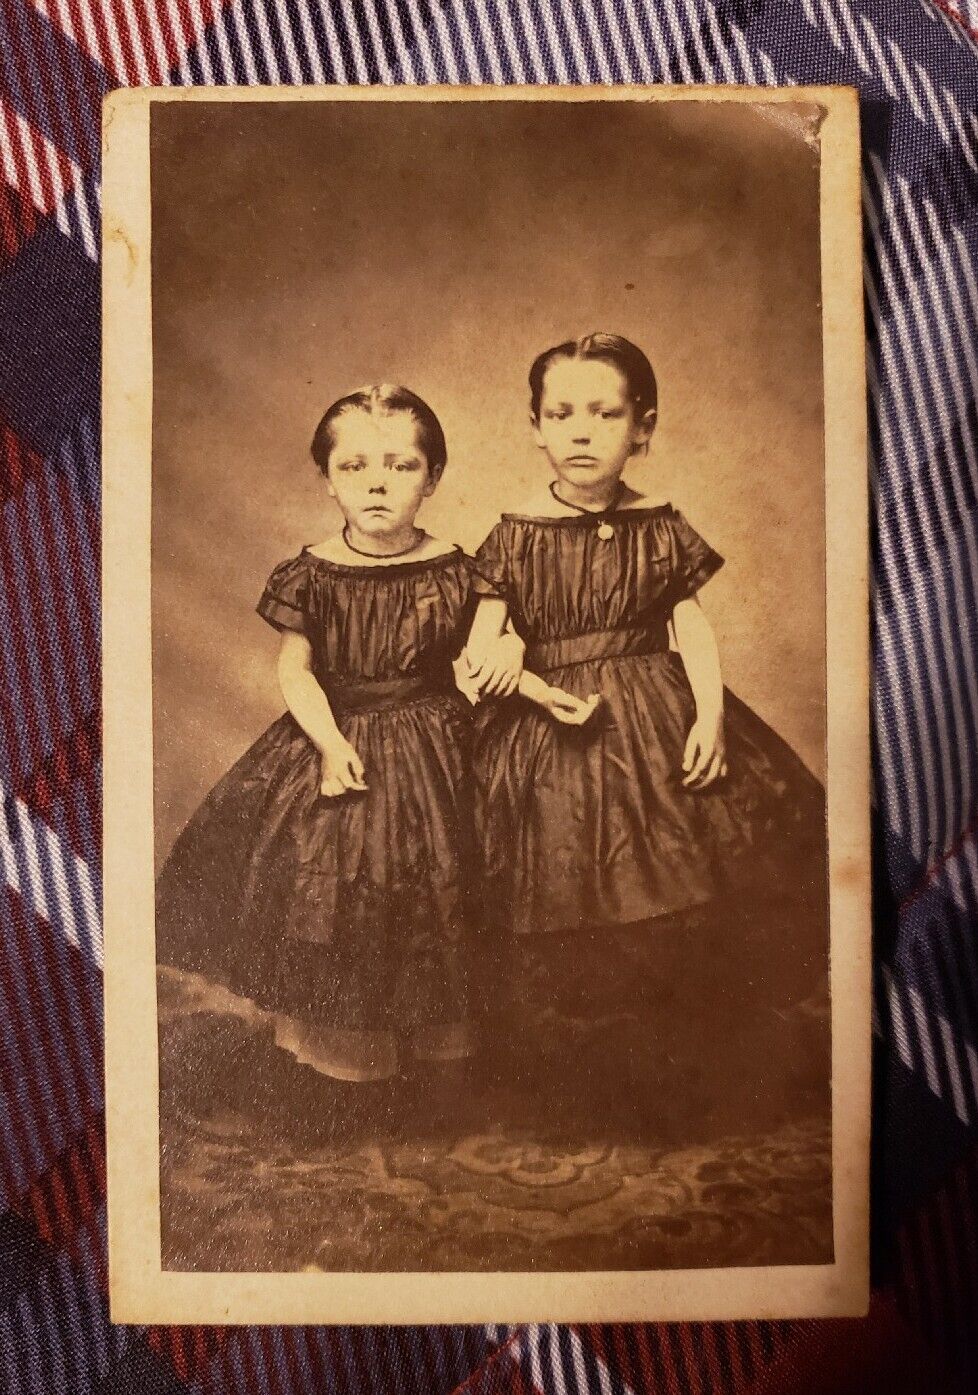 Two Beautiful Little Girls/Sisters. Matching Dresses. Civil War. Kerr Family.